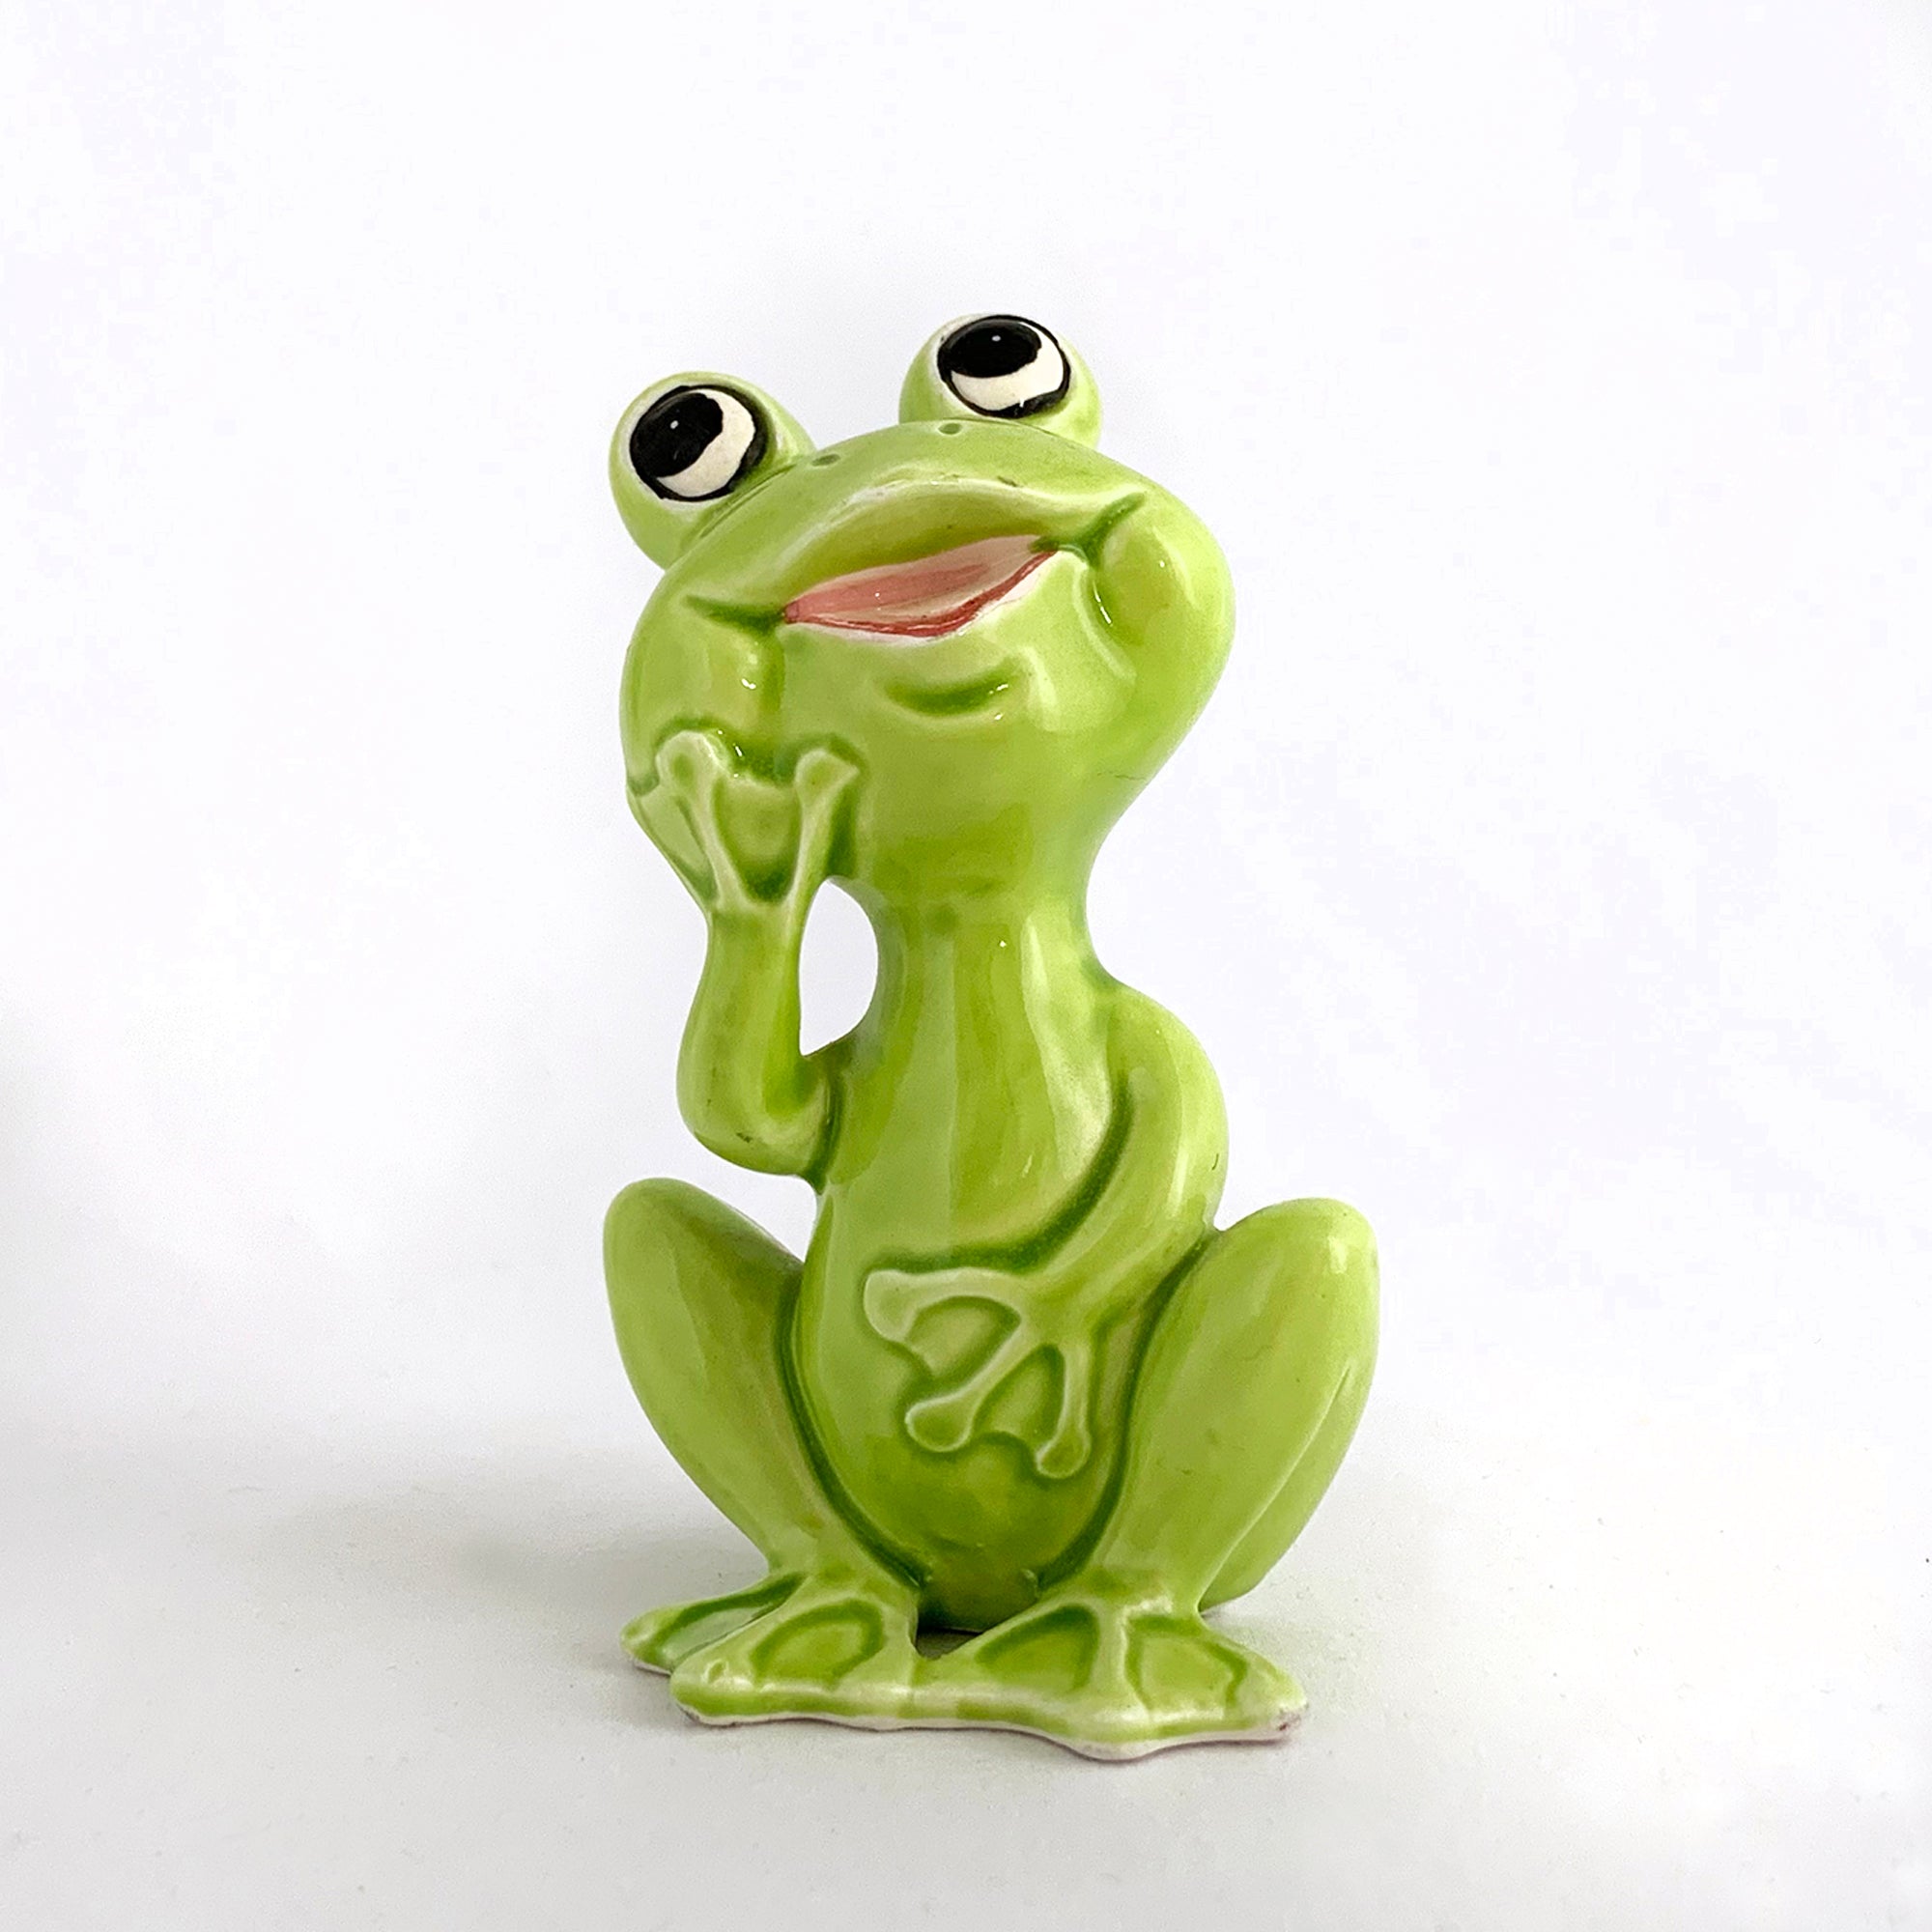 Vintage Mid-Century Ceramic Lime Green Smiling Seated Frog Figurine,  Noritake Japan for Gift Craft Toronto